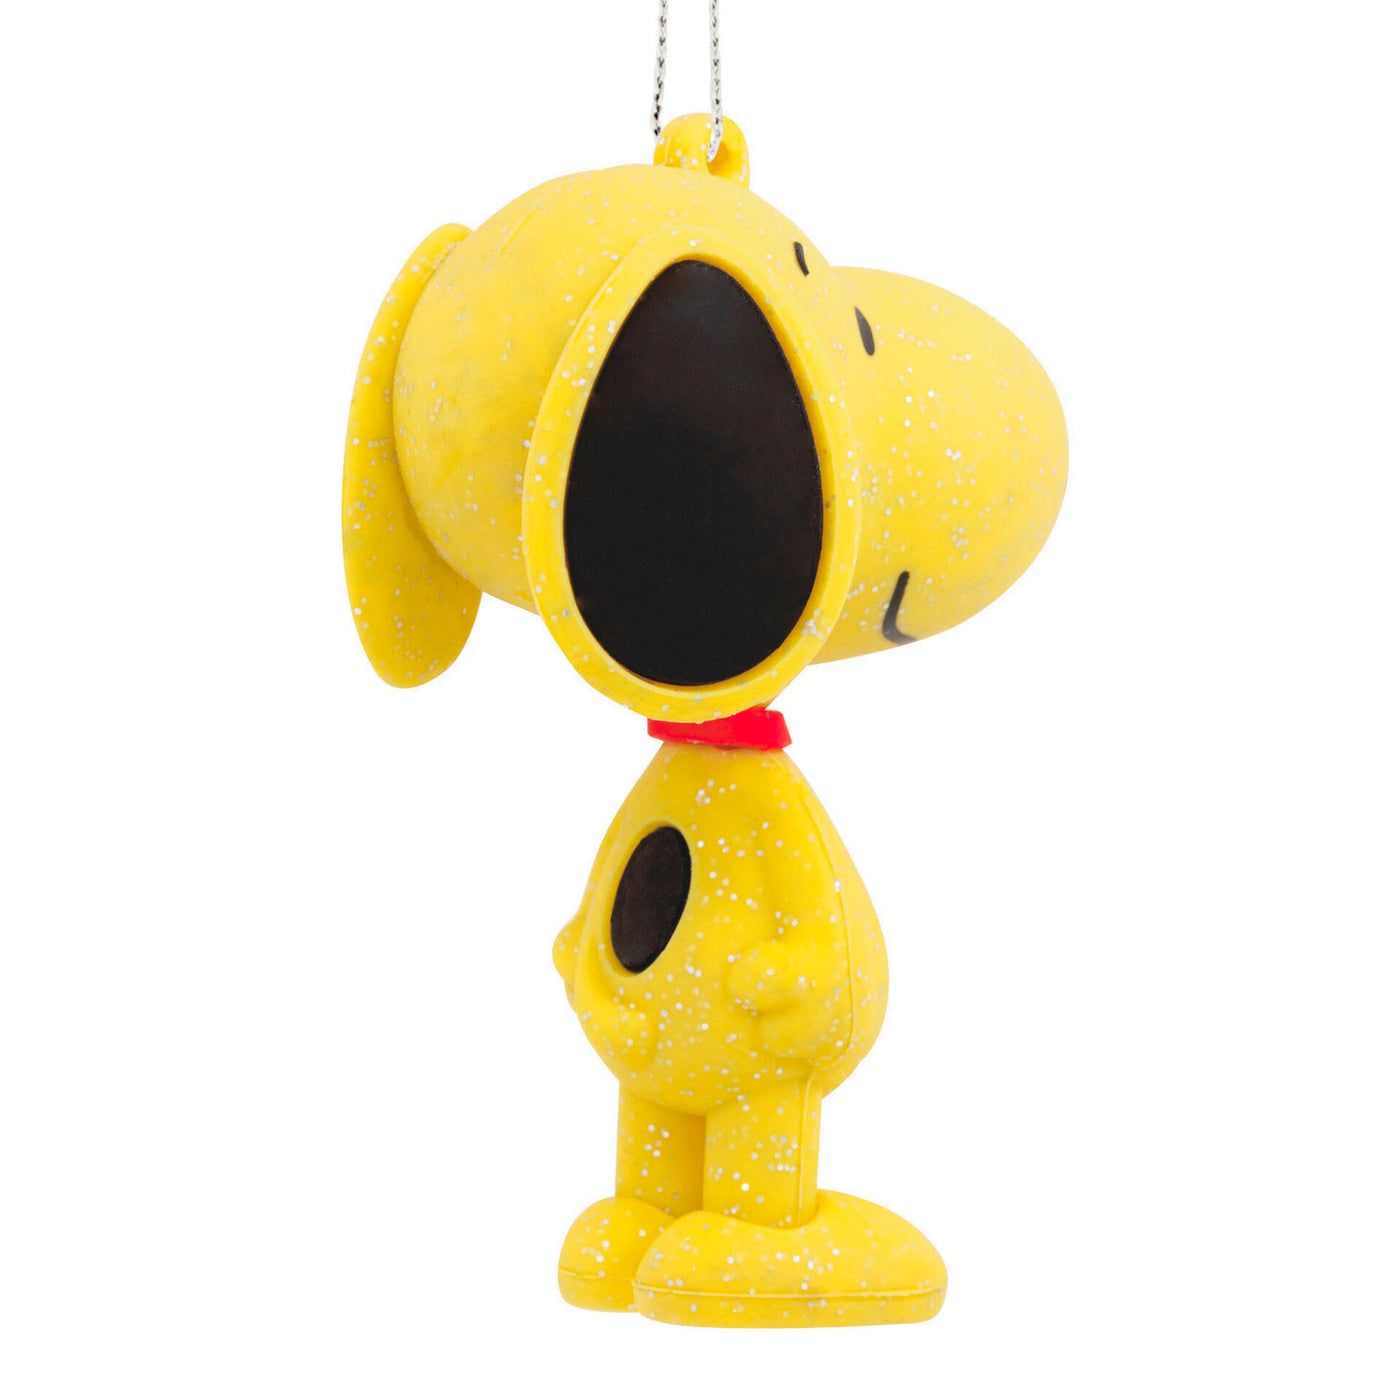 Hallmark Peanuts Snoopy Yellow Glitter Ornament New With Tag